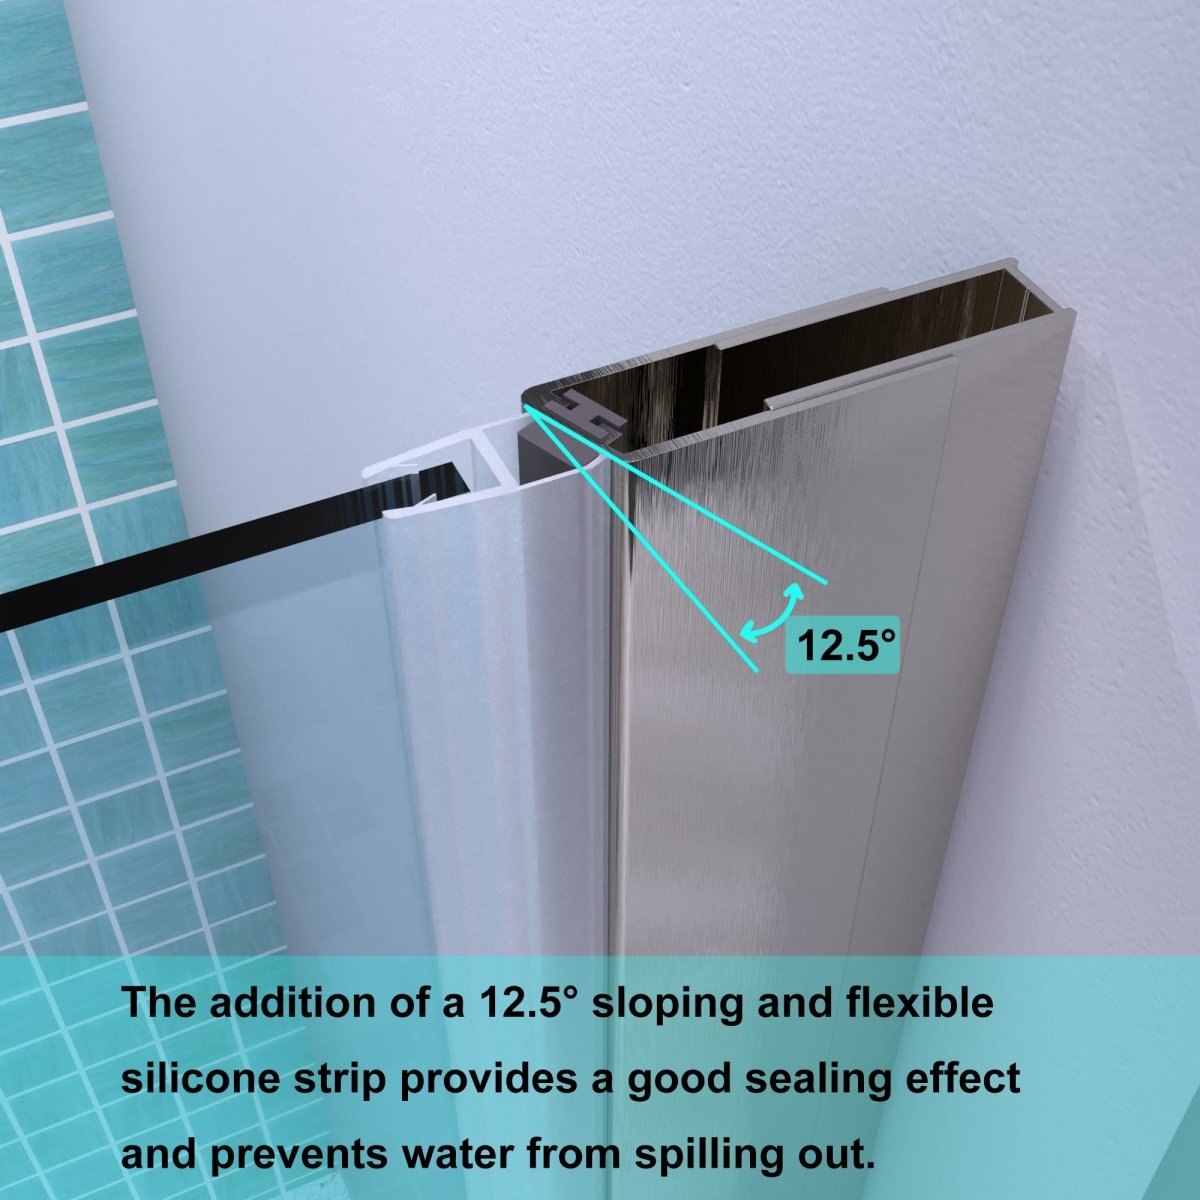 Classy 32-33 1/2" W x 72" H Pivot Shower Door Semi-Frameless Hinged In Nickel Install Glass Shower Door